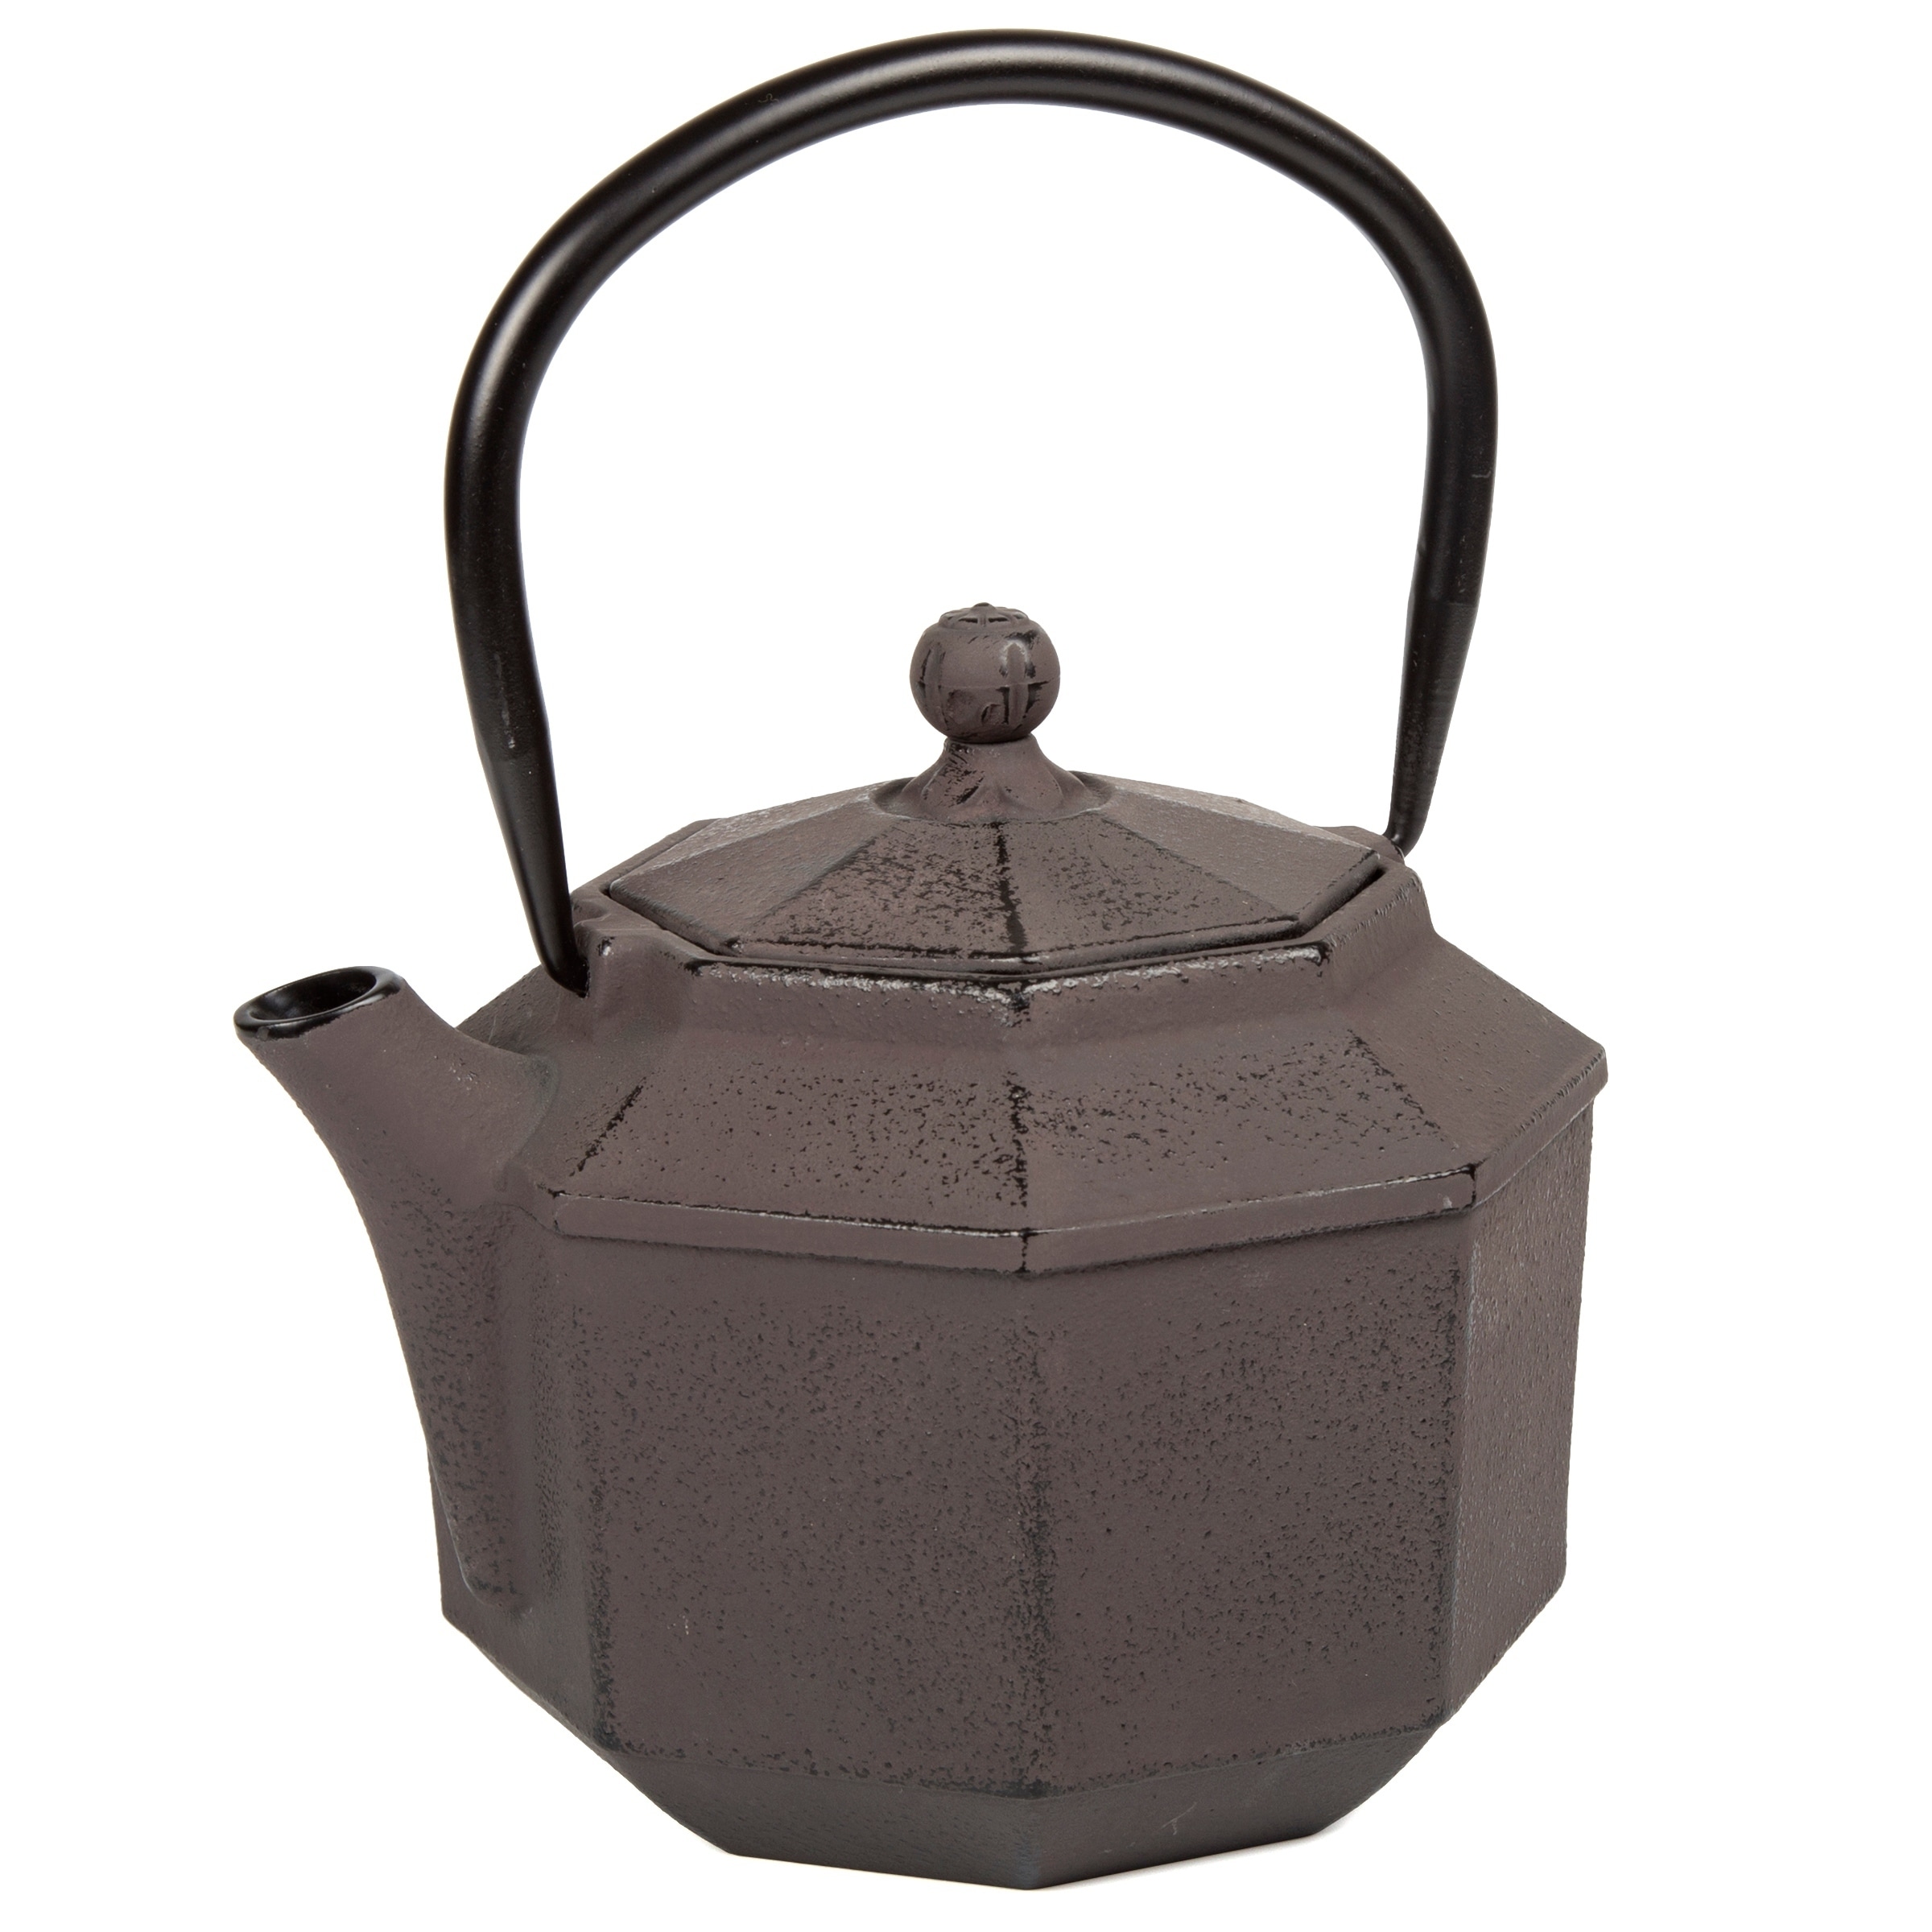 https://ak1.ostkcdn.com/images/products/30260513/Creative-Home-Kyusu-Cast-Iron-Pot-Japanese-Tetsubin-Tea-Kettle-with-Stainless-Steel-Infuser-Basket-34-oz-Brown-371e5e6e-b670-4839-b592-6899a88daf3a.jpg